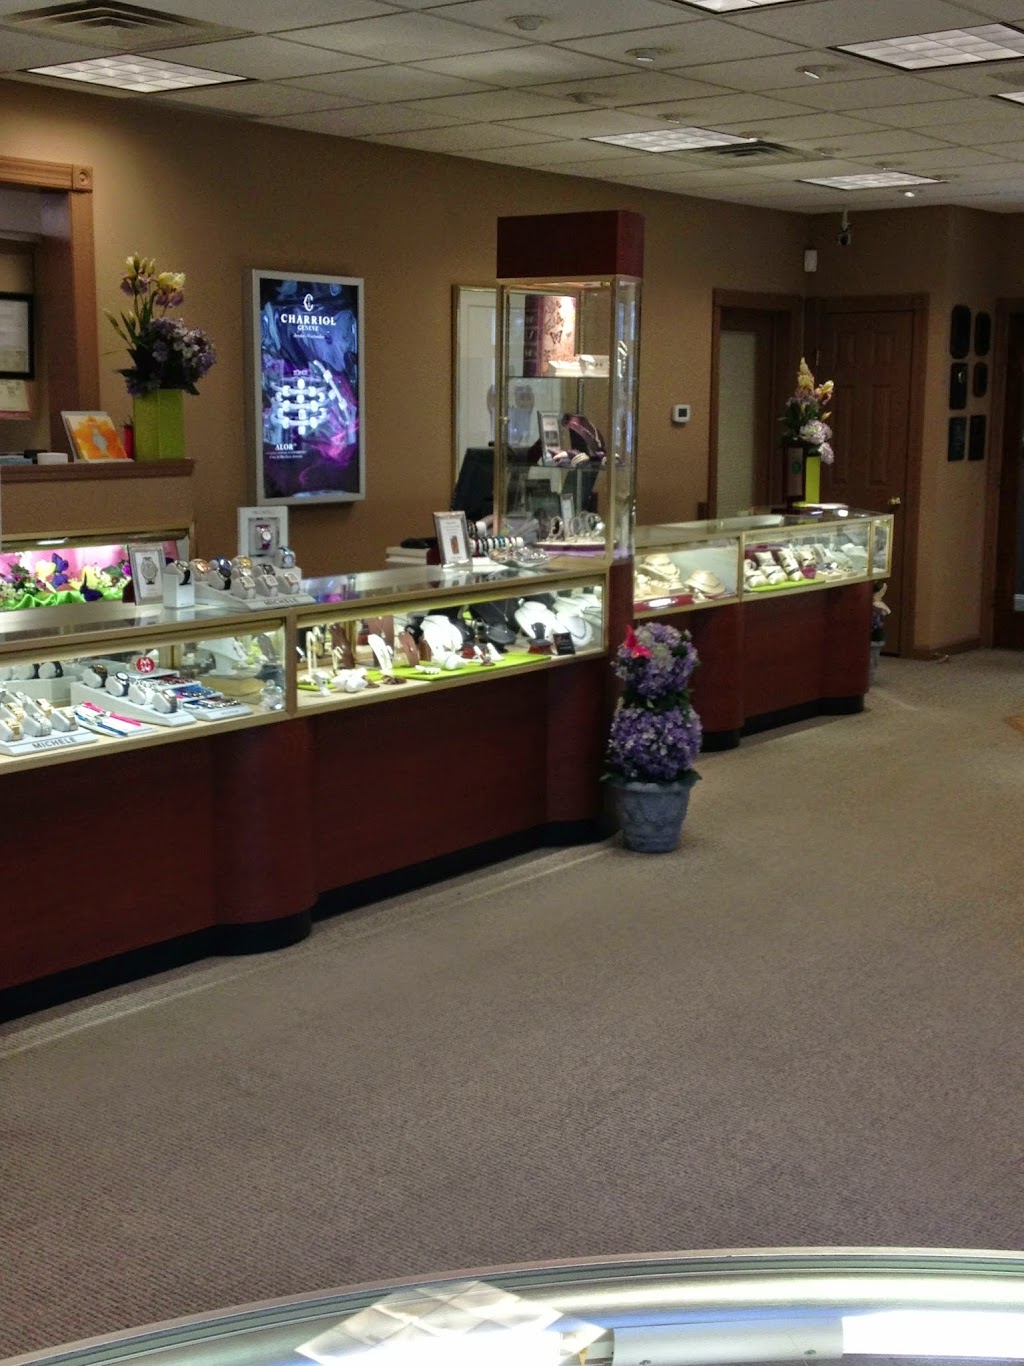 John Herold Jewelers Inc | 1201 Sussex Turnpike, Randolph, NJ 07869, USA | Phone: (973) 895-5664